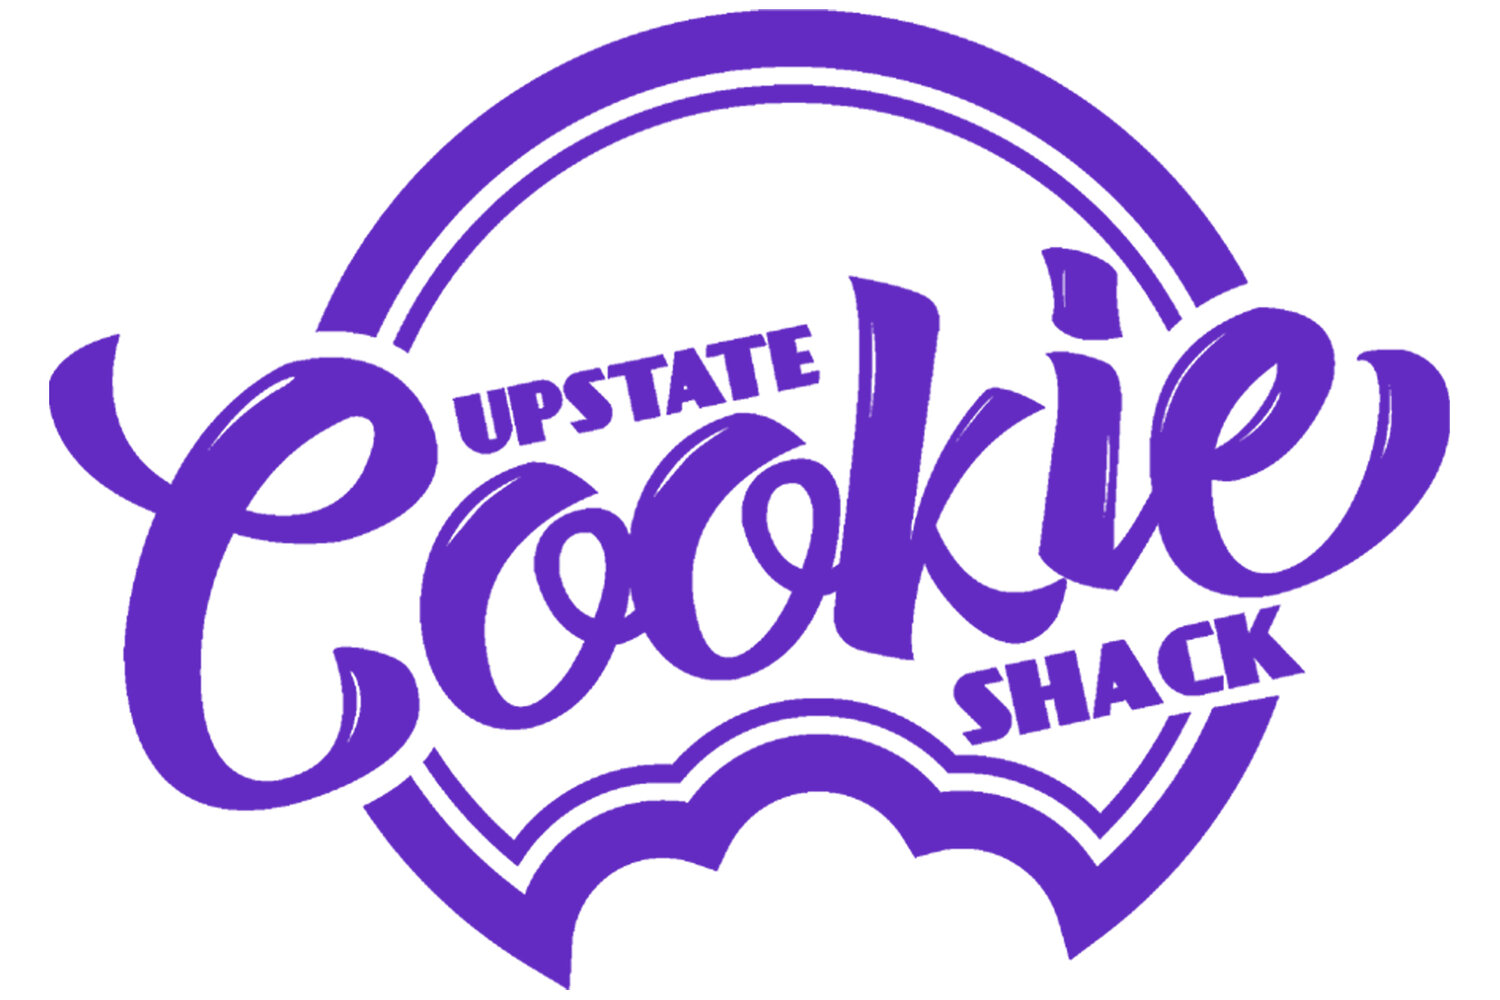 Upstate Cookie Shack 